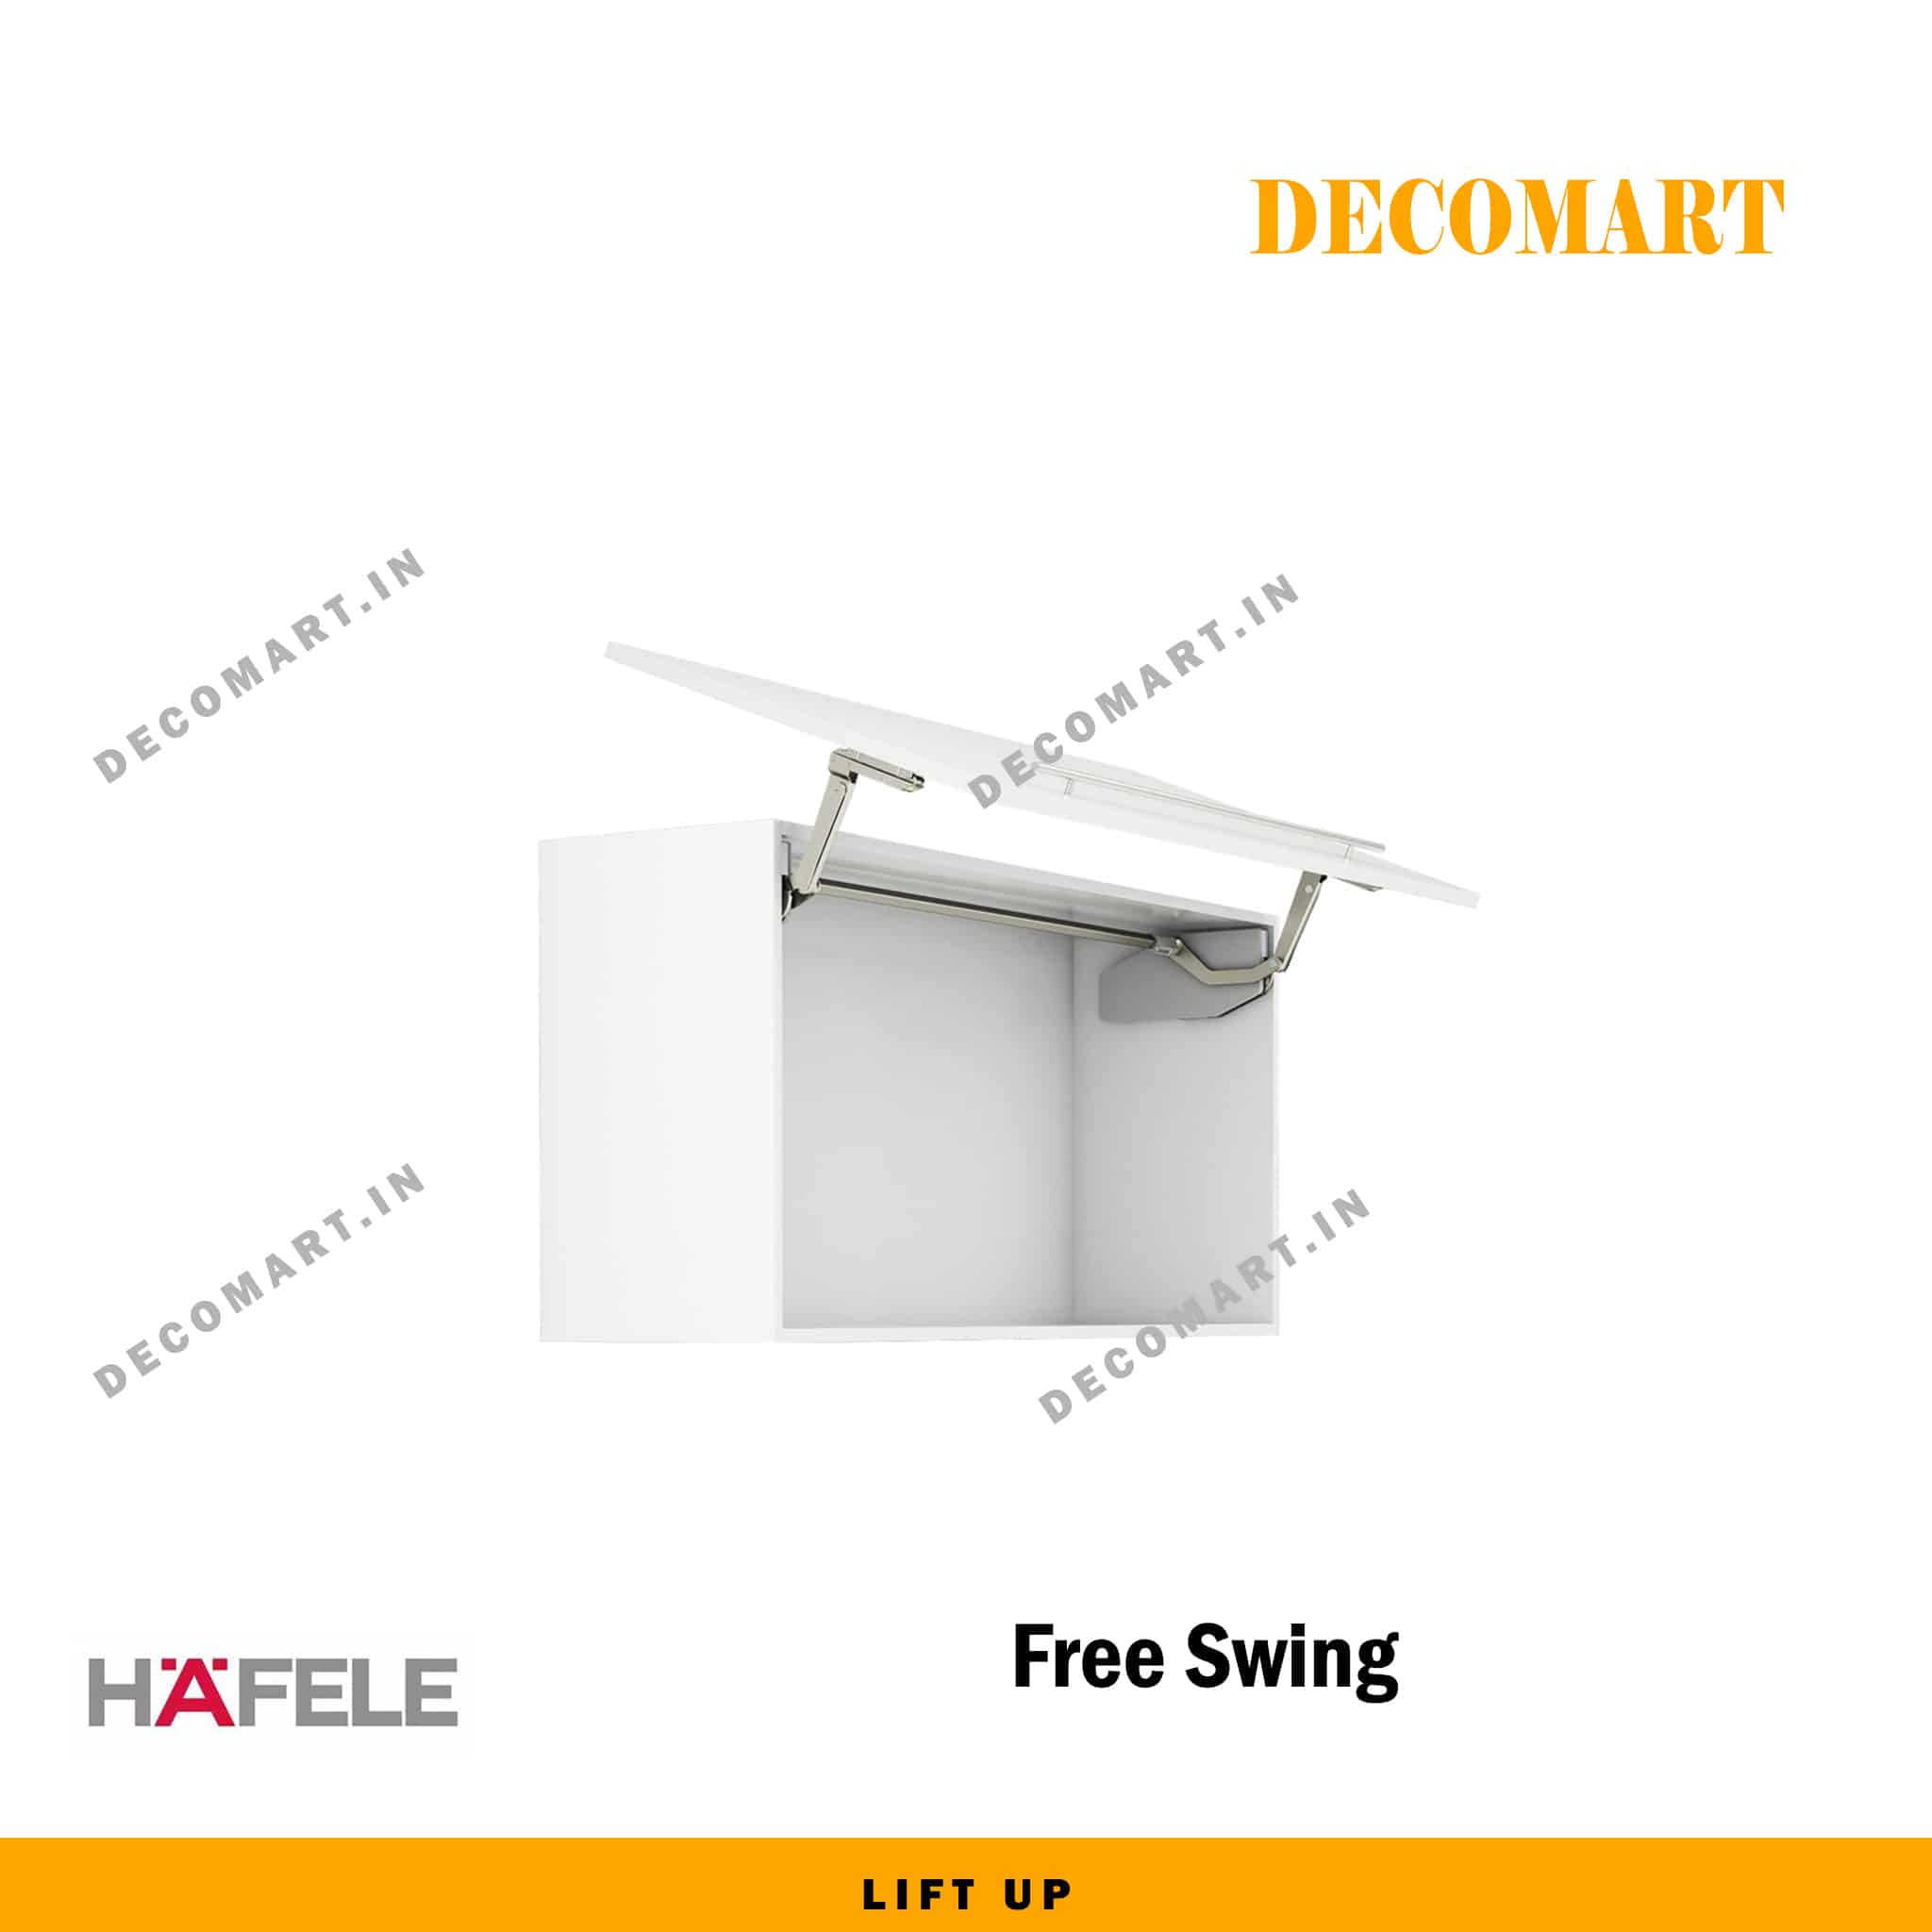 Hafele Free Swing Lift Up